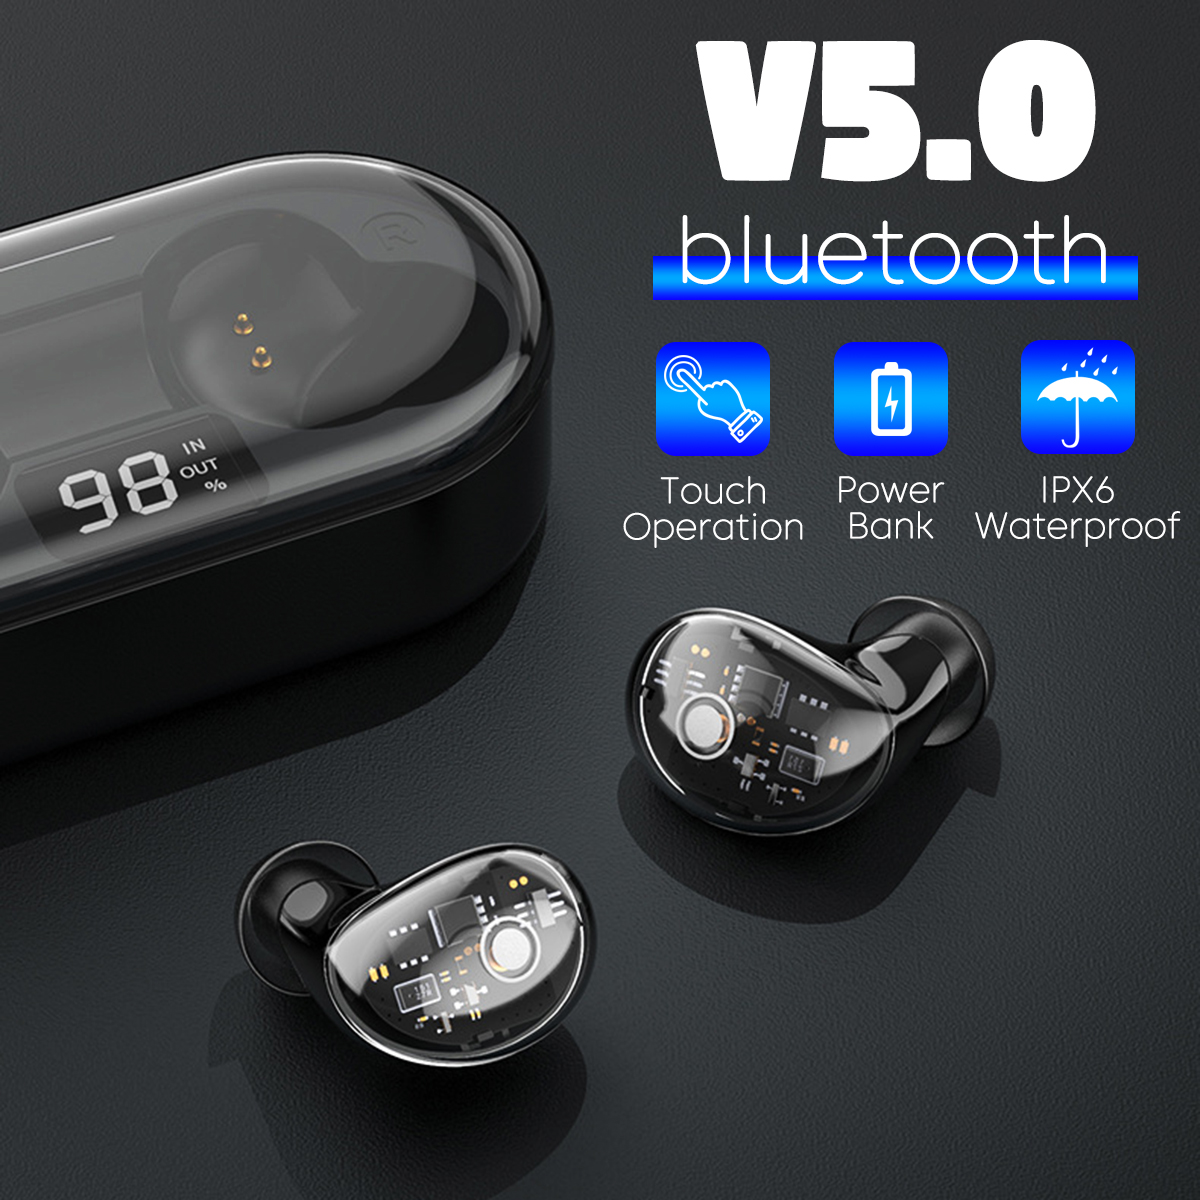 X7-TWS-Touch-bluetooth-50-Earphone-Digital-Display-Hifi-Stereo-Auto-Pair-IPX6-Waterproof-Headset-wit-1573130-1